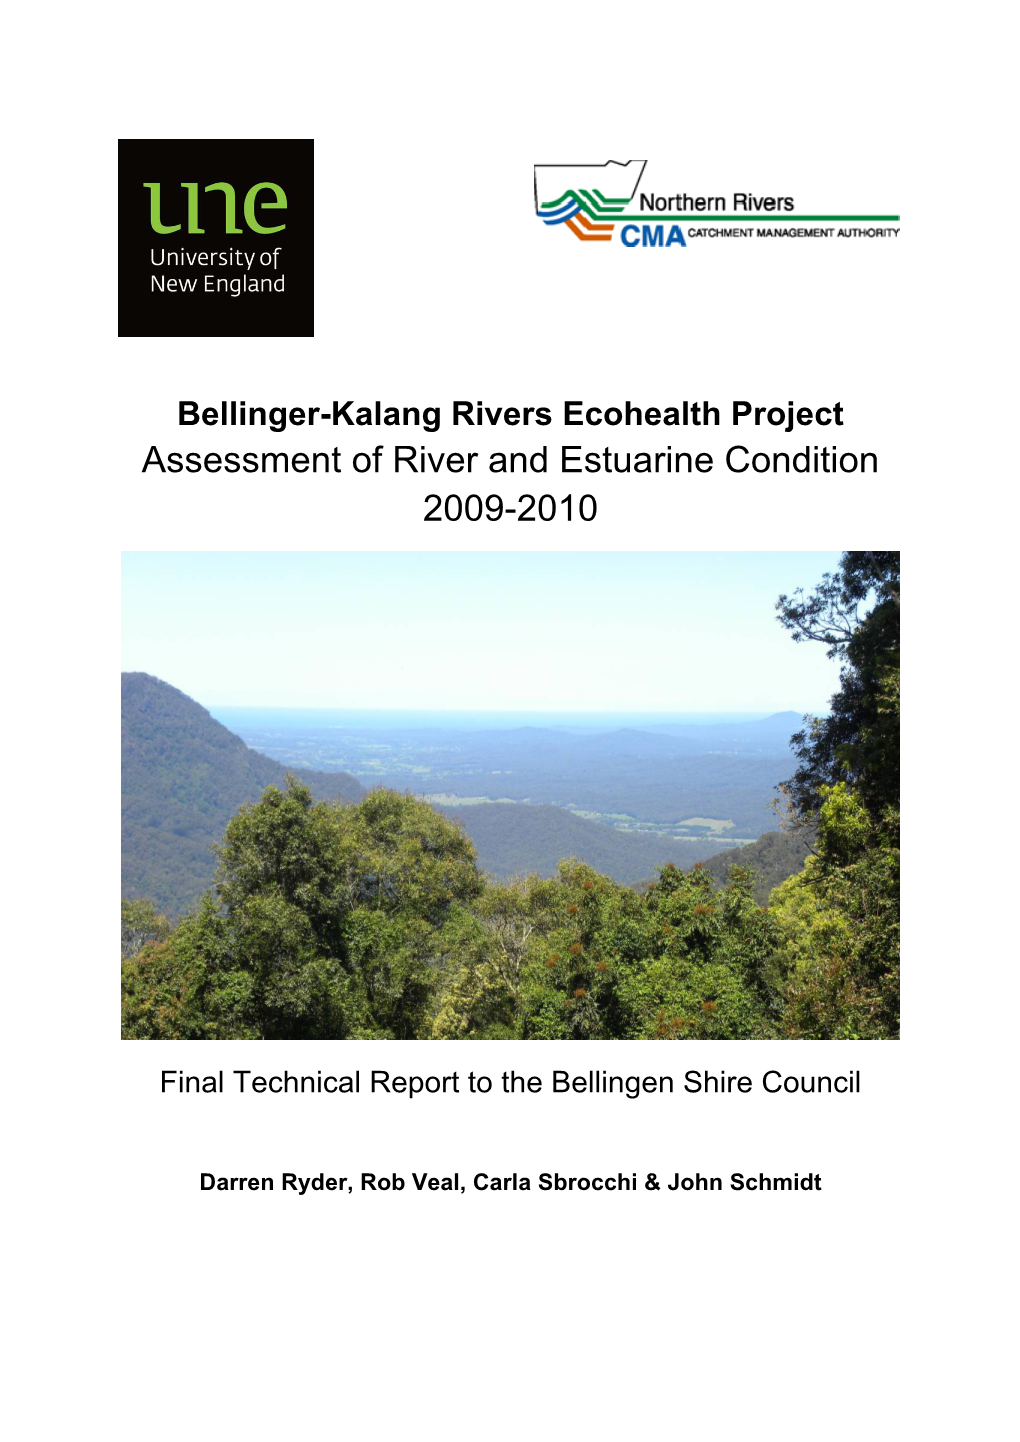 Bellinger-Kalang Rivers Ecohealth Project, Assessment of River